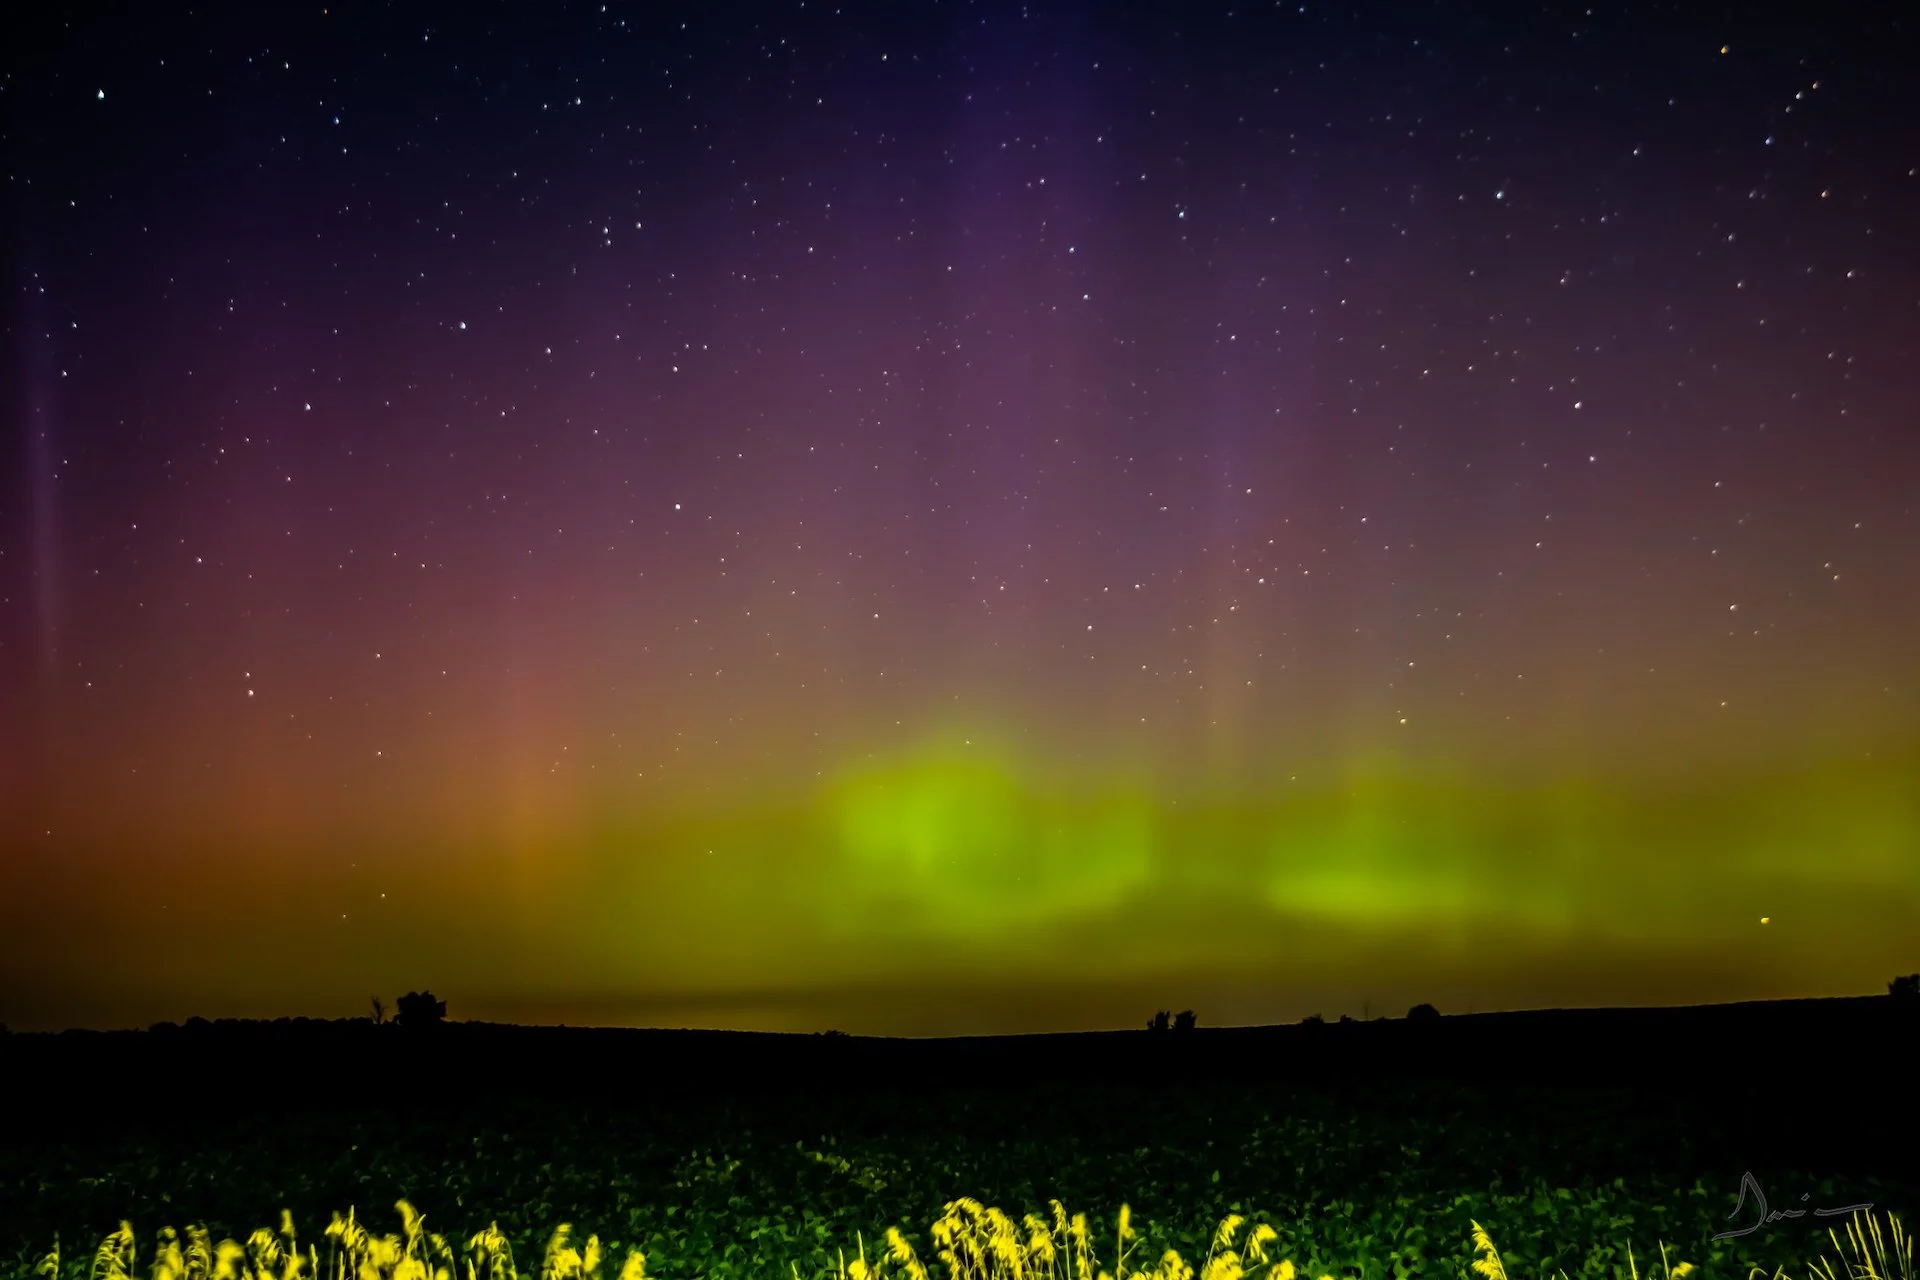 PHOTOS: Stunning auroras on display across Canada during solar storm